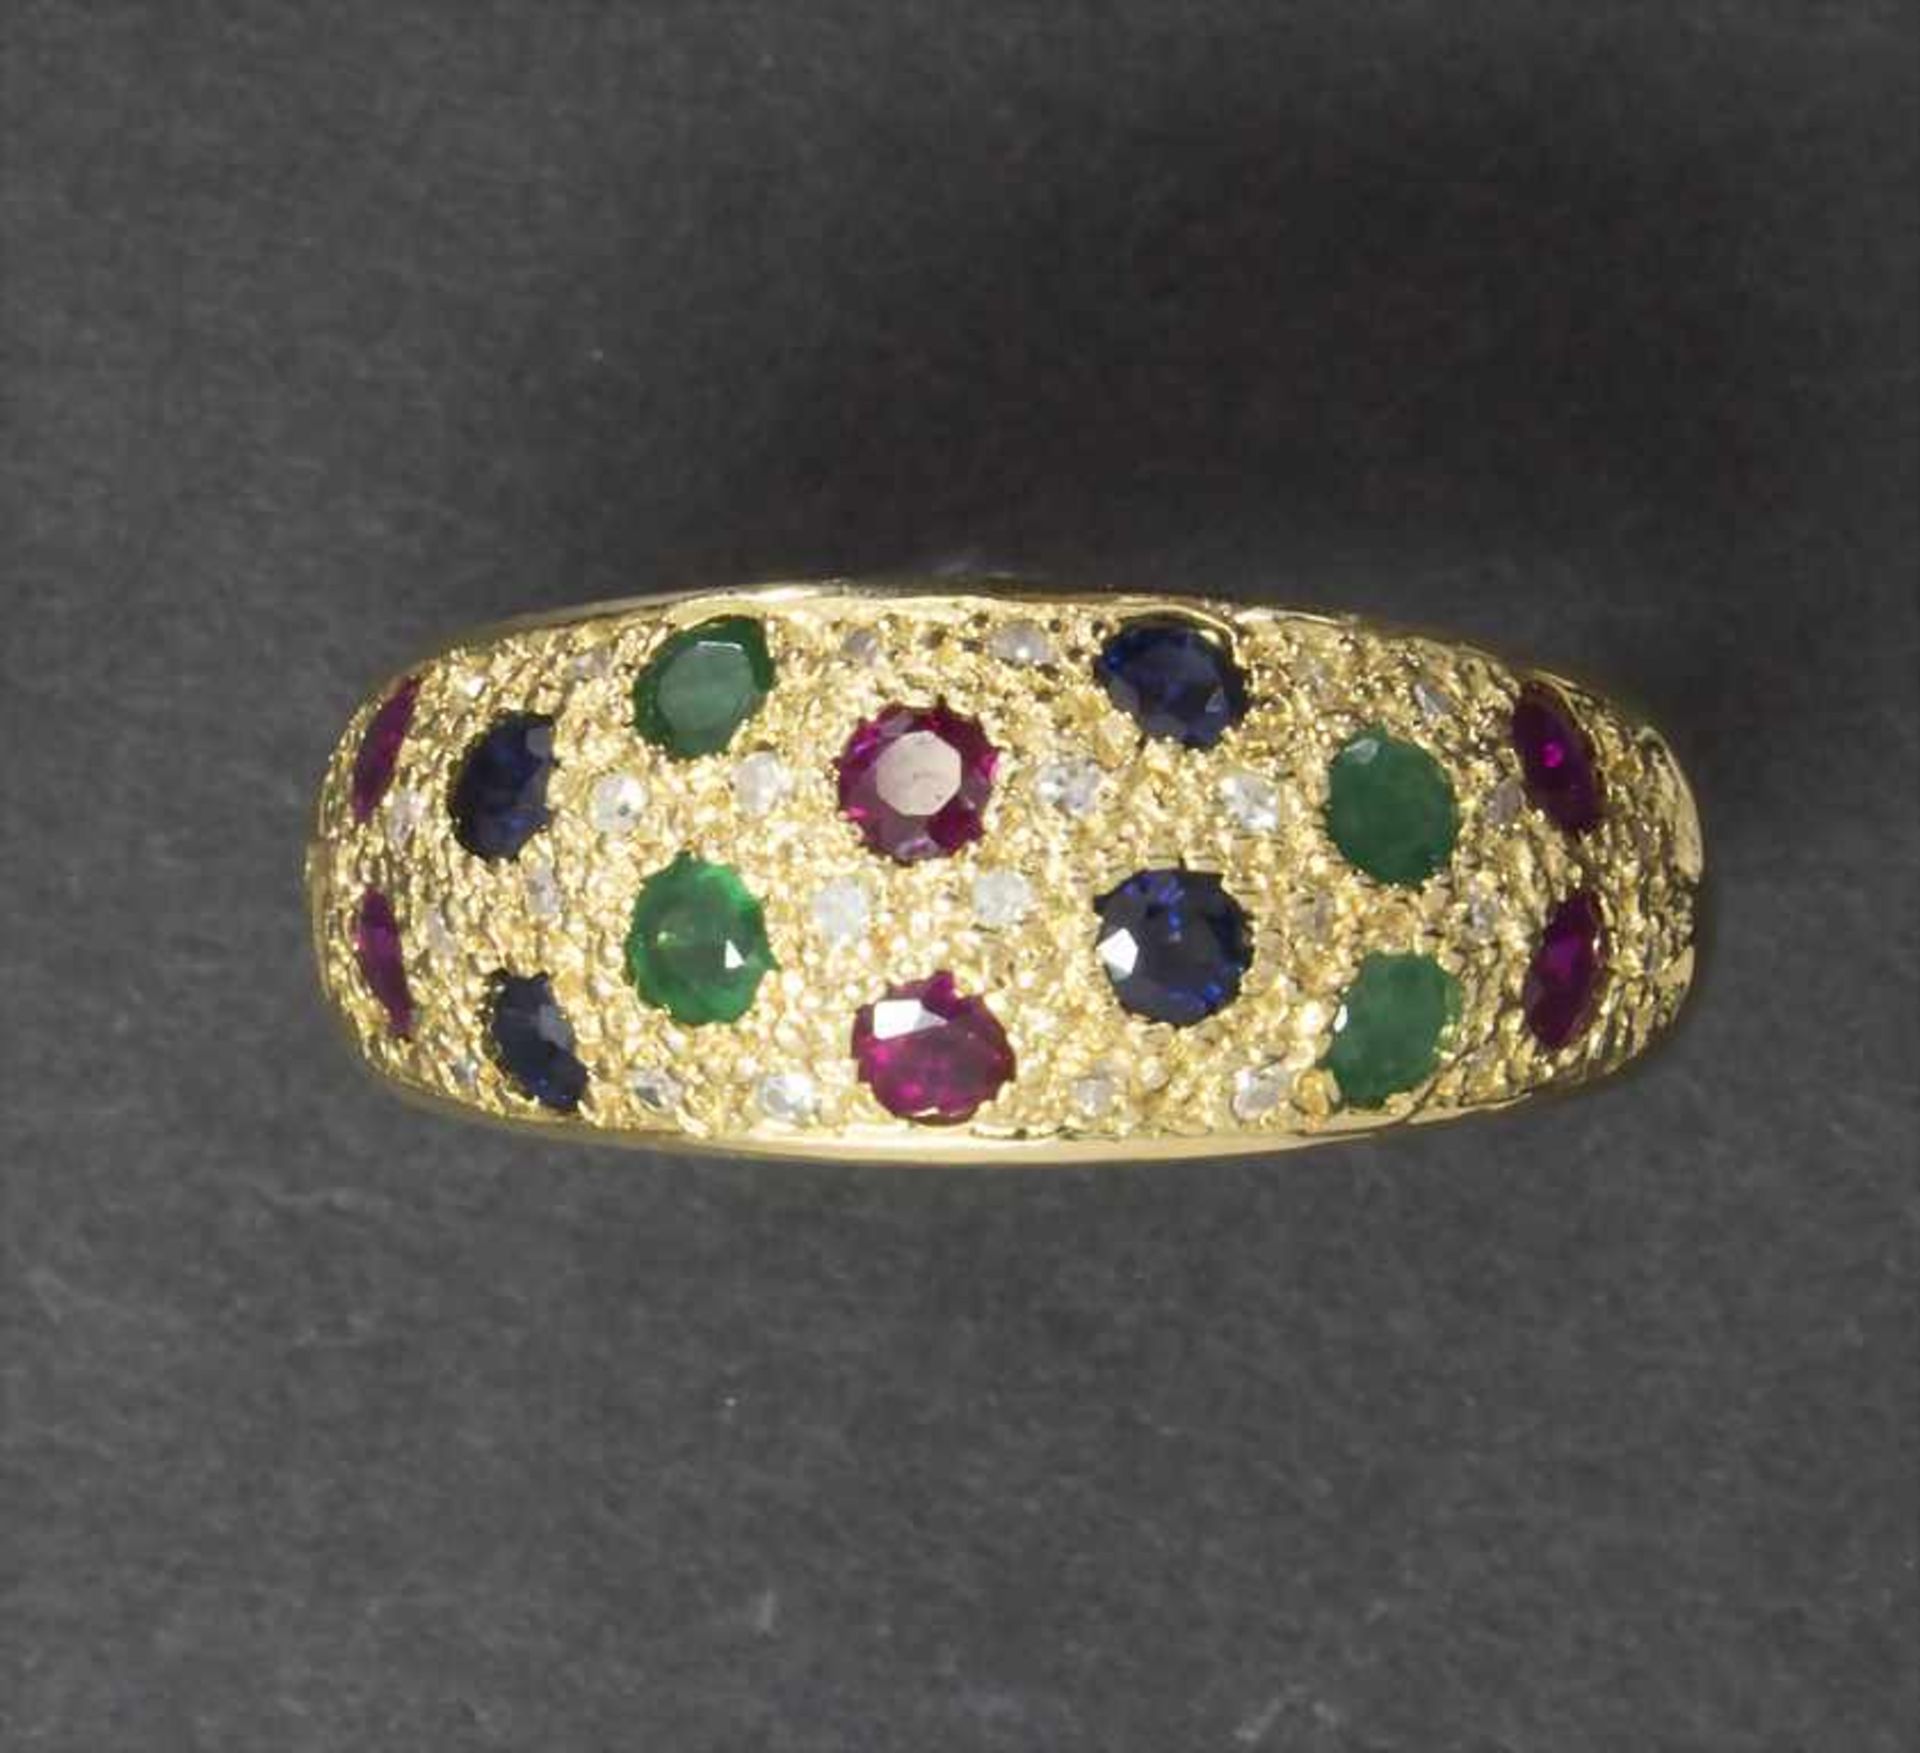 Damenring mit Diamanten Edelsteinen / A ladies ring with diamonds and gemstonesMaterial: Gelbgold